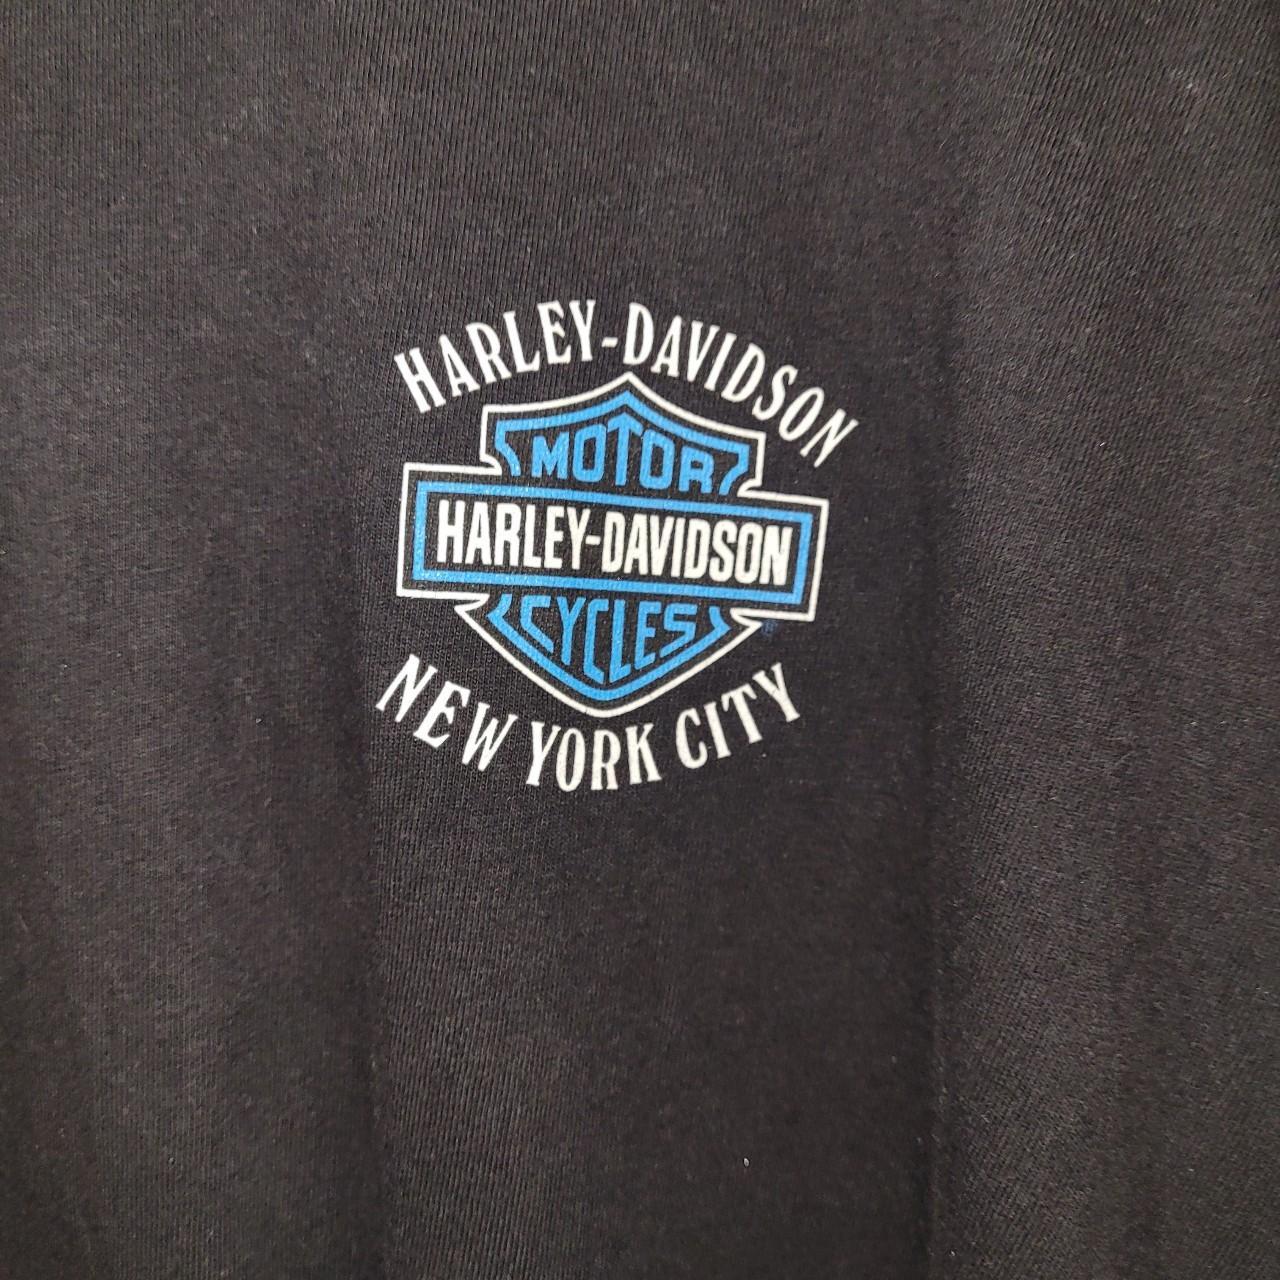 Xl 05' Harley Davidson New York. City Long sleeve t... - Depop